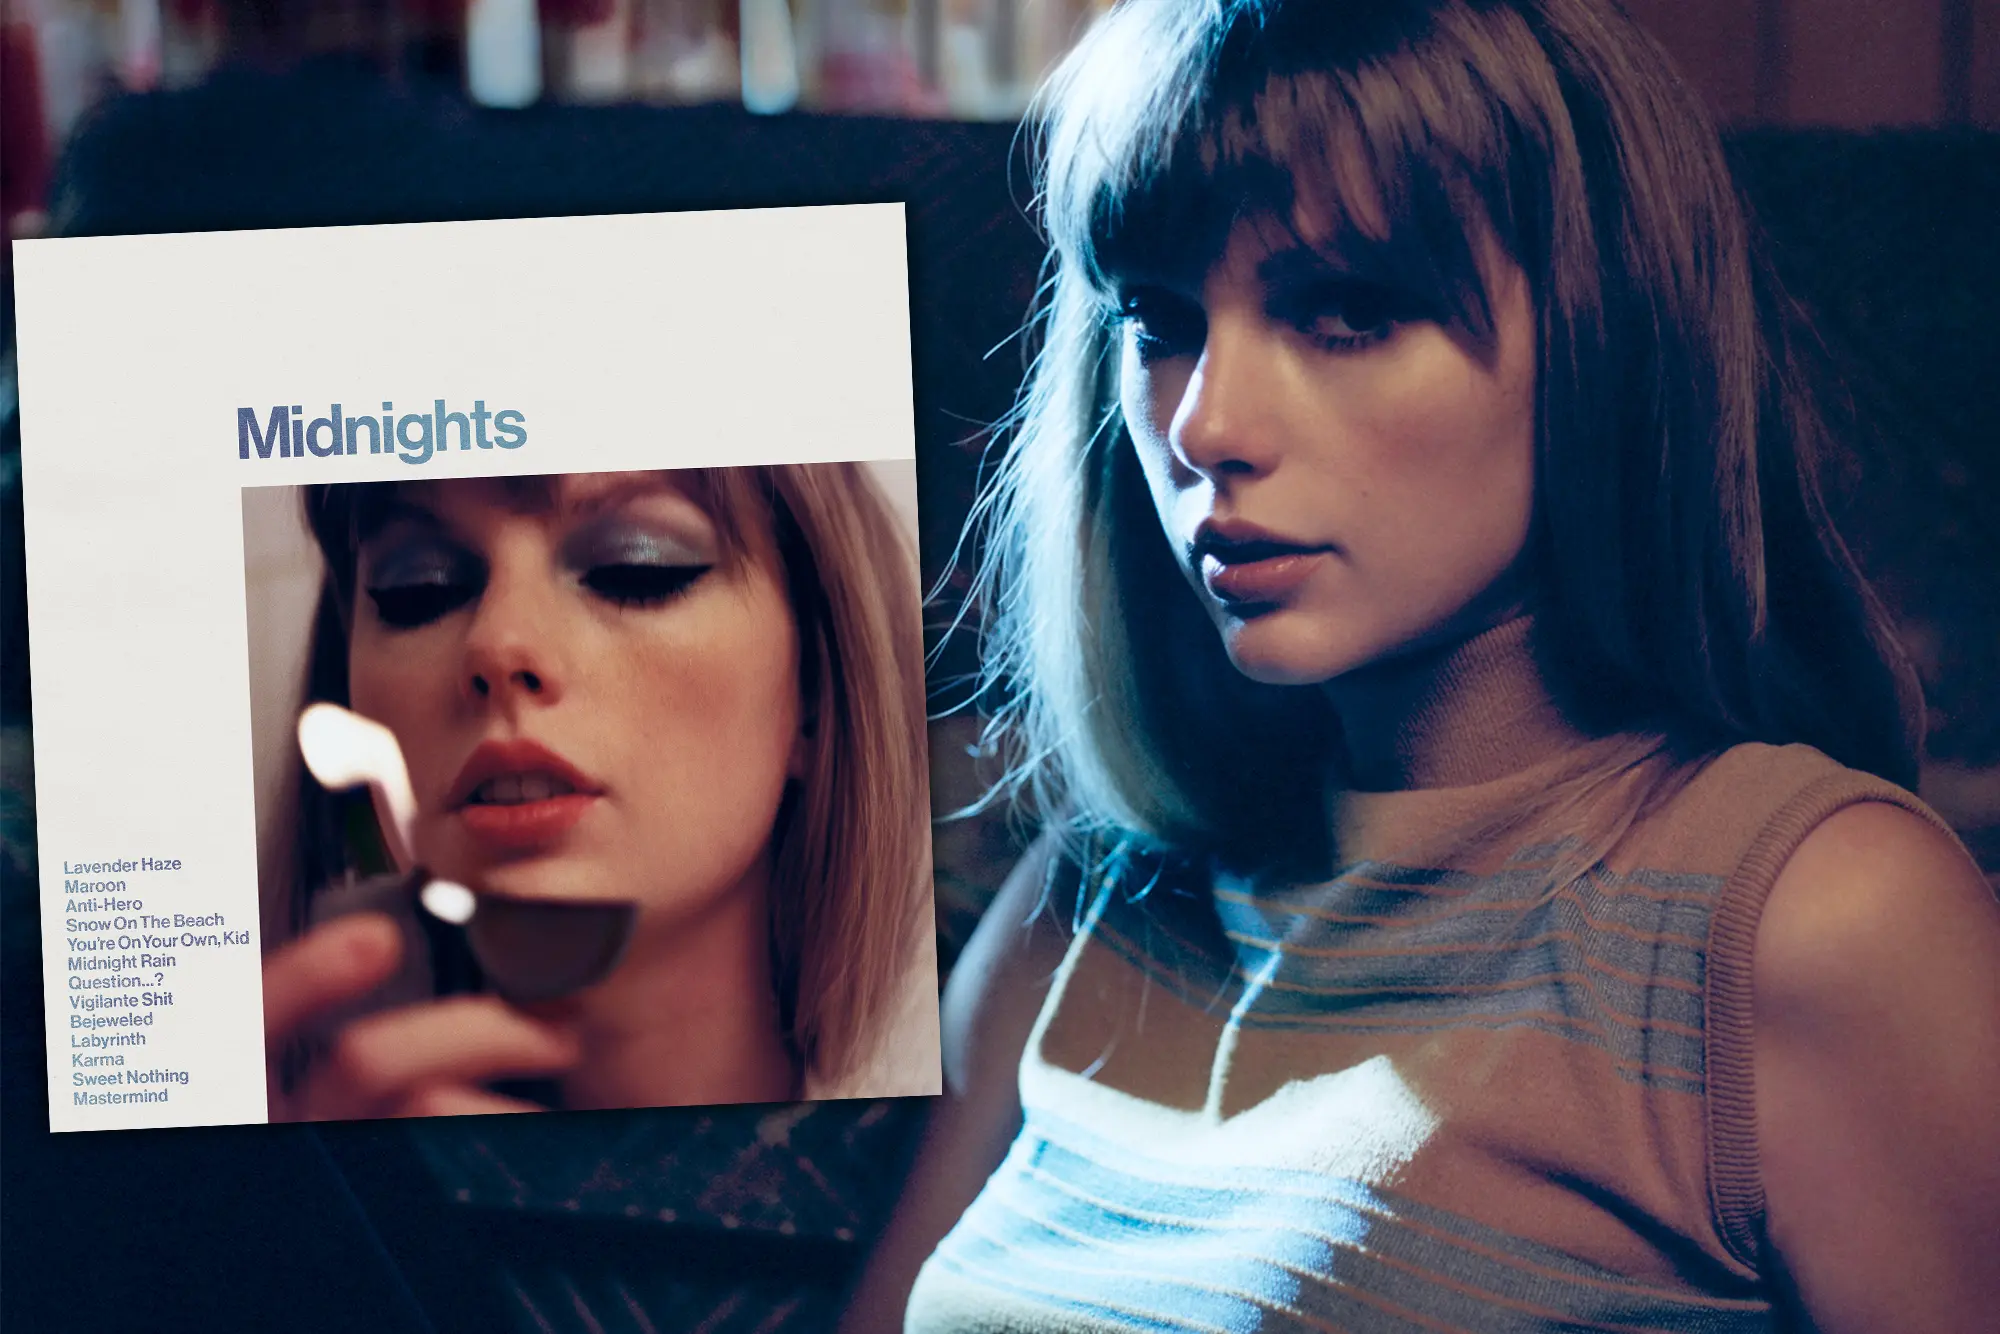 Midnights- Album by Taylor Swift